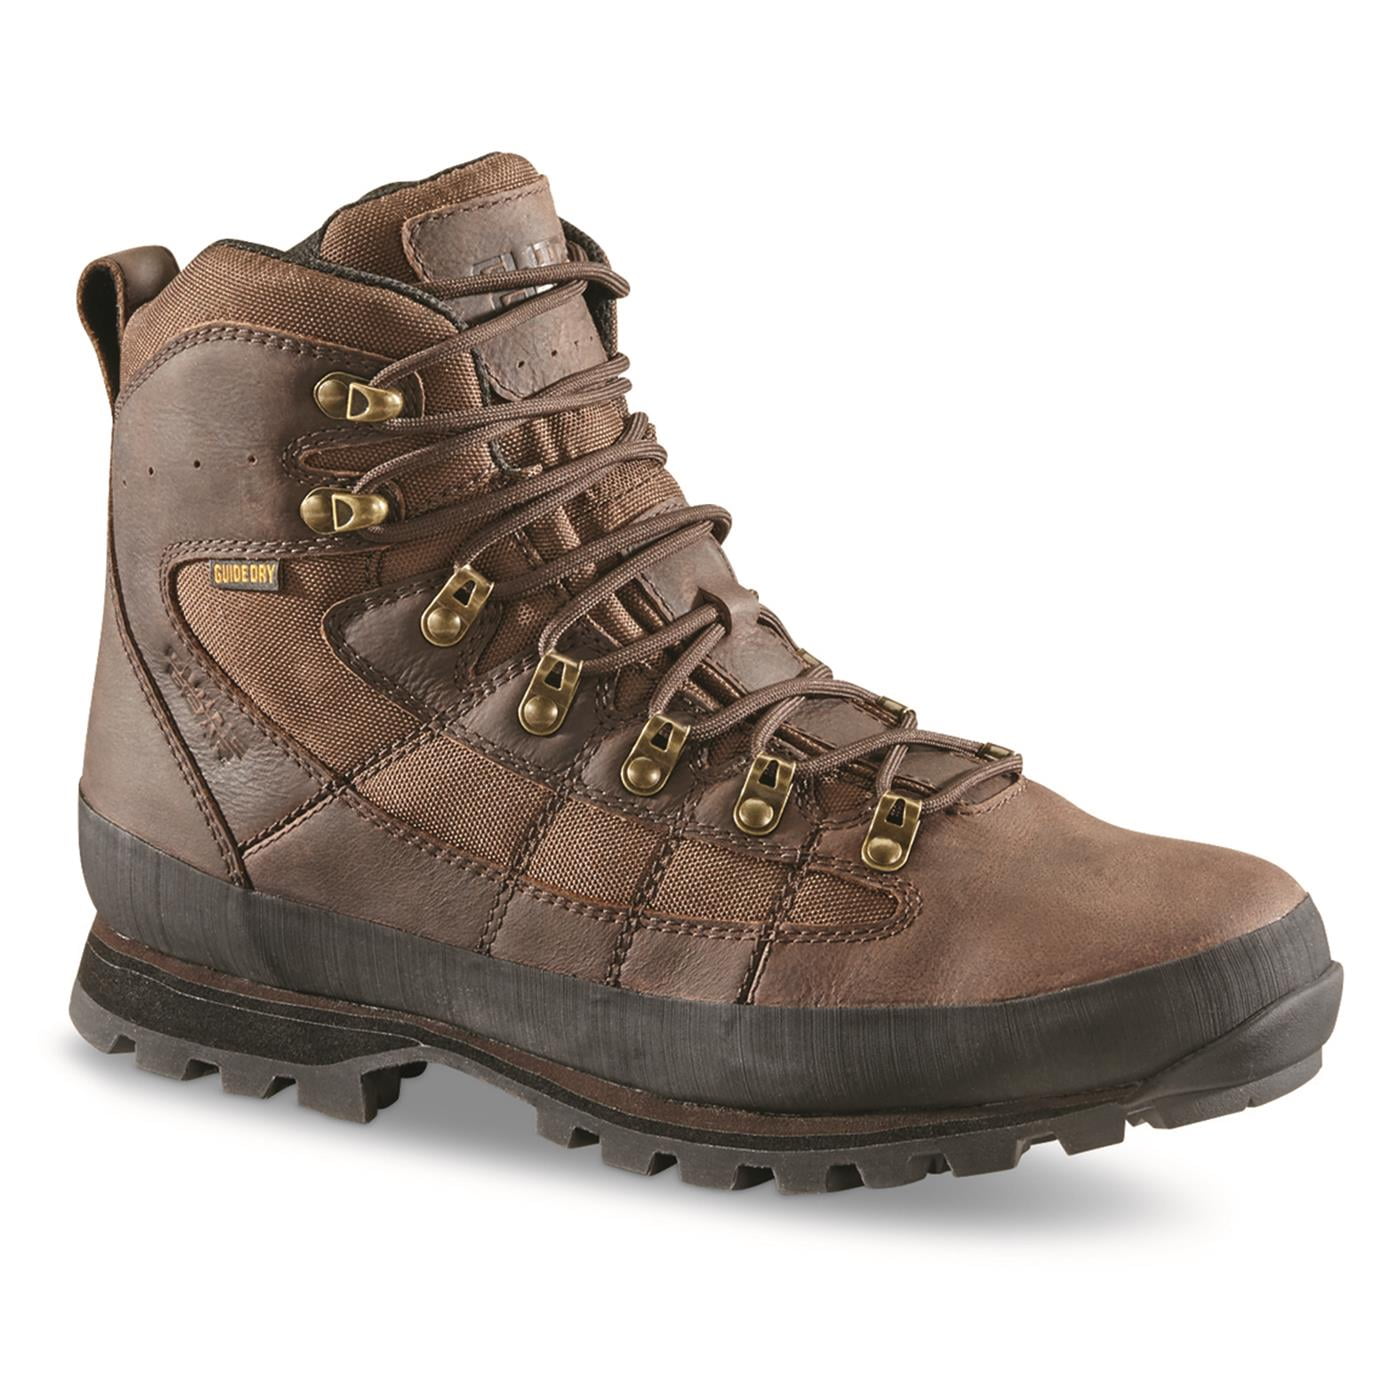 Guide Gear Acadia II Men's Hiking Boots Waterproof Outdoor Shoes